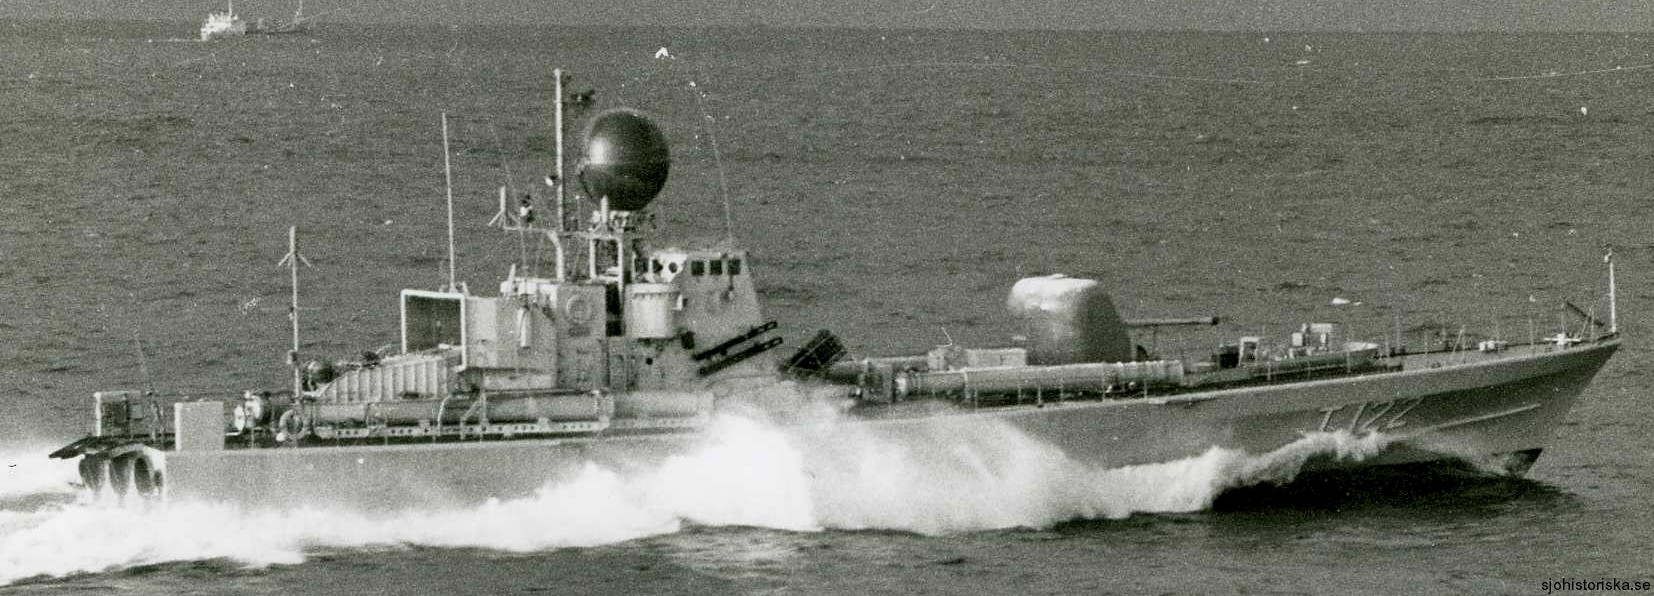 t122 sirius hswms hms spica class fast attack craft torpedo boat vessel swedish navy svenska marinen 02